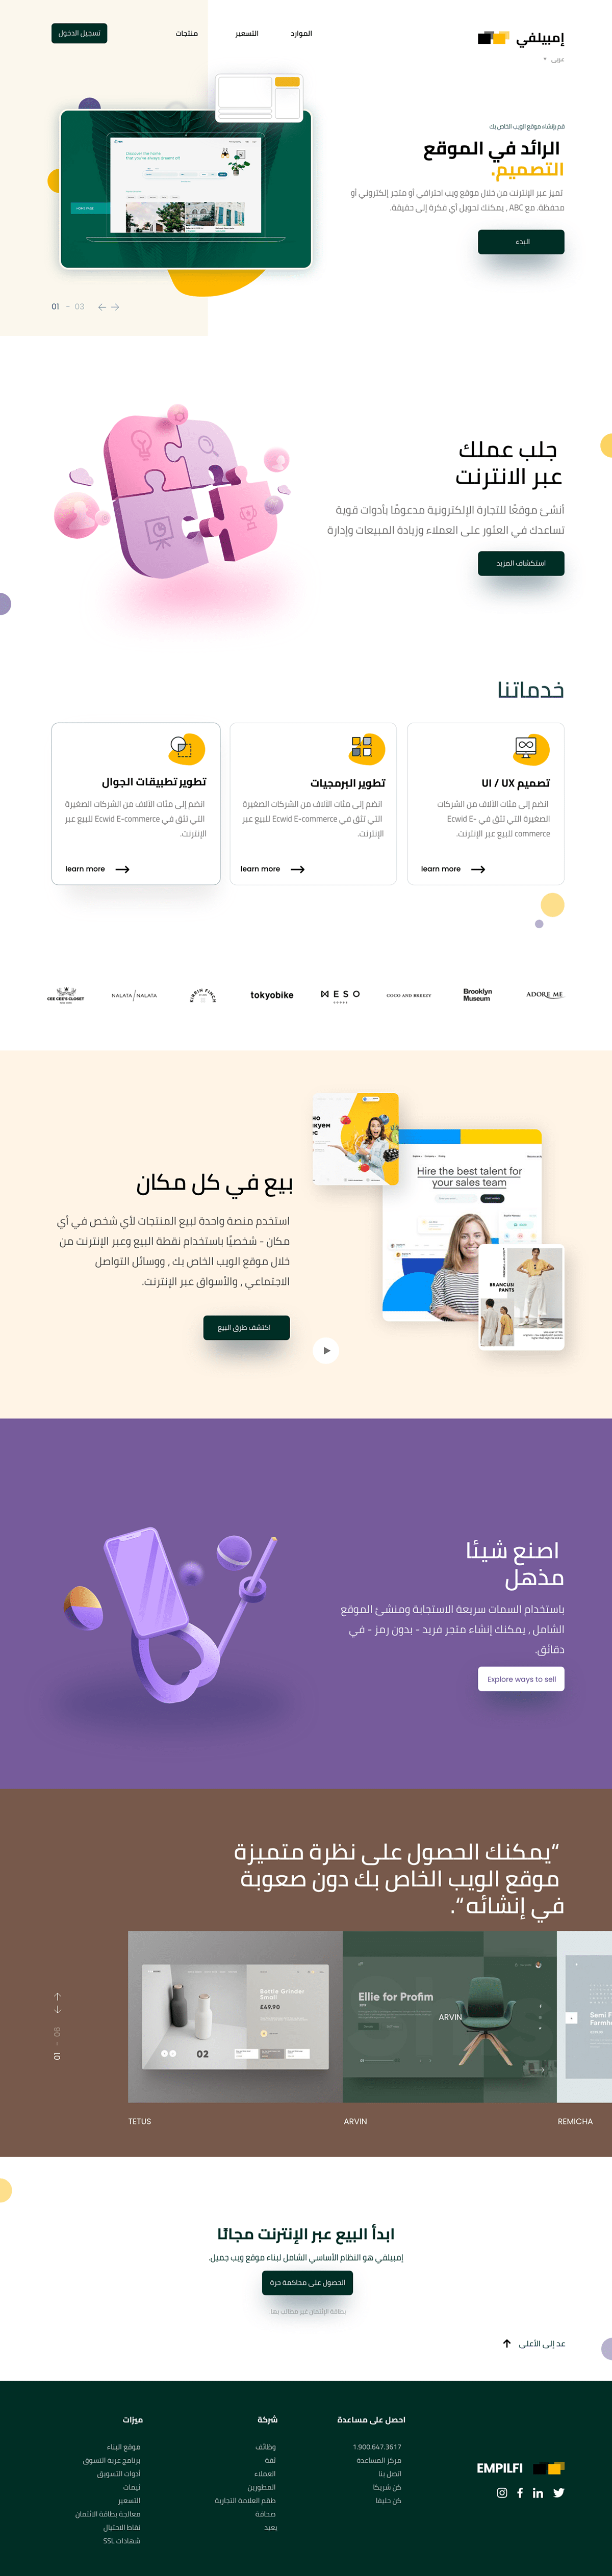 arabic style app arabic website UI/UX adobe ad landing page redesign ЛЕНДИНГ ПОСАДОЧНАЯ СТРАНИЦА СЛАДОСТИ development agency web development 